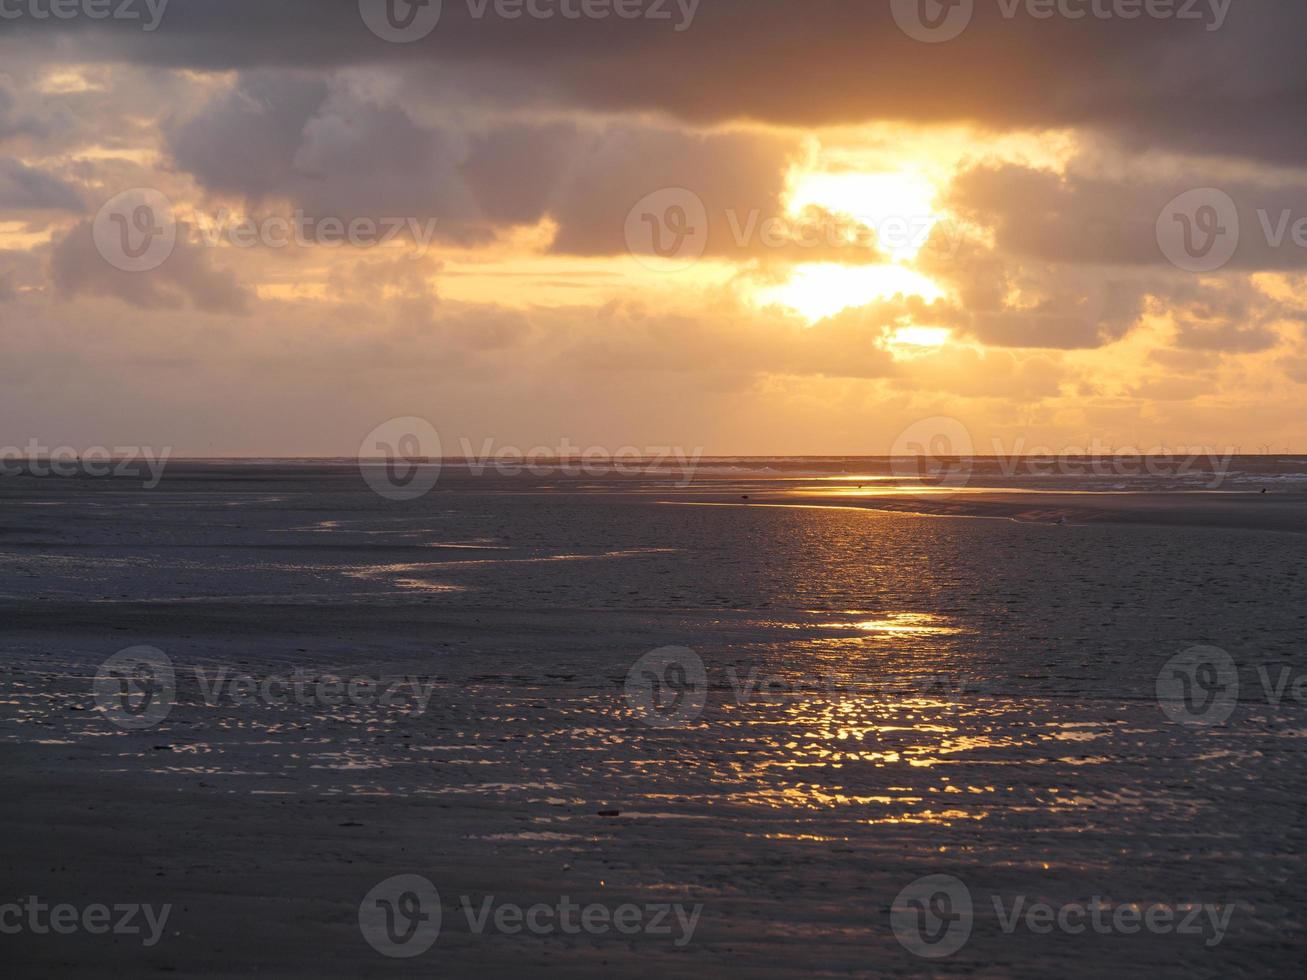 sundown at the beach of Juist photo